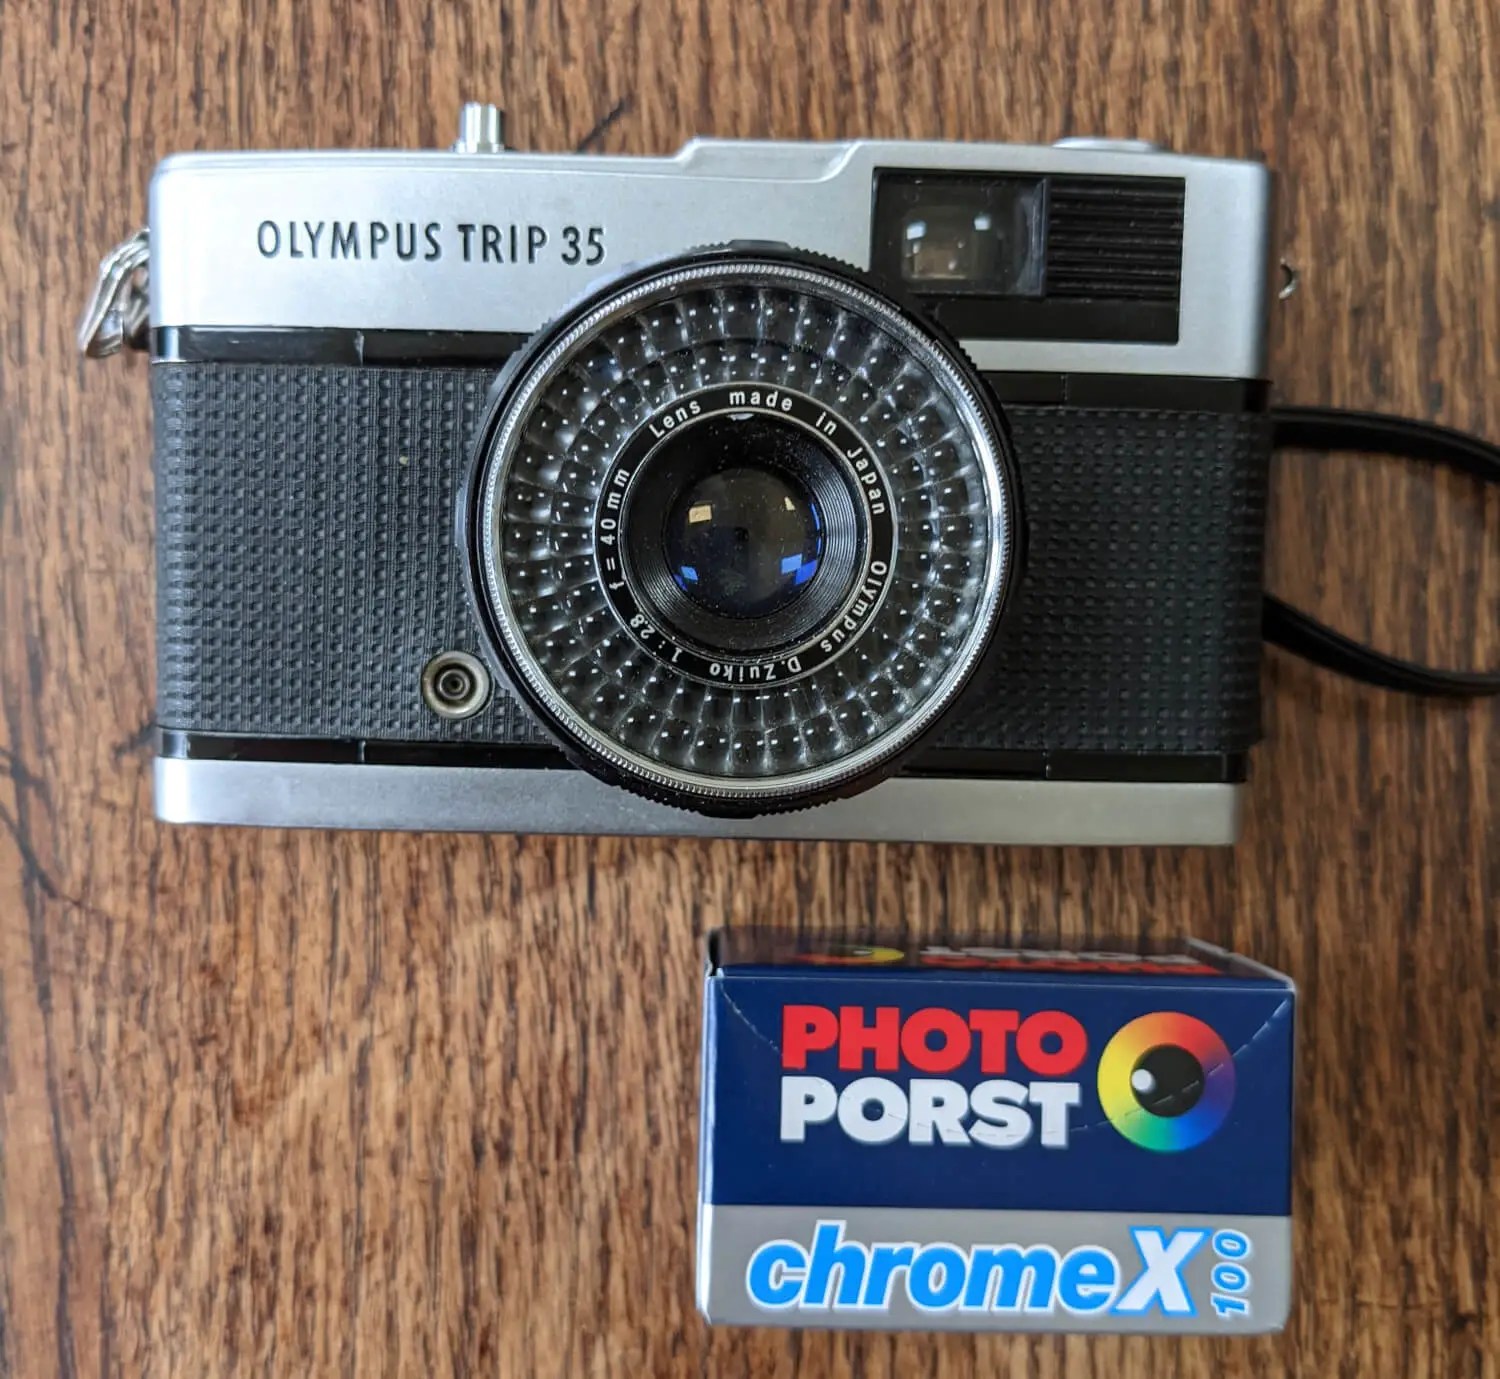 5 Frames… On expired Photo Porst Chrome X slide film with an Olympus Trip 35 (35mm format / EI 100 / Olympus D.Zuiko 40mm f/2.8)